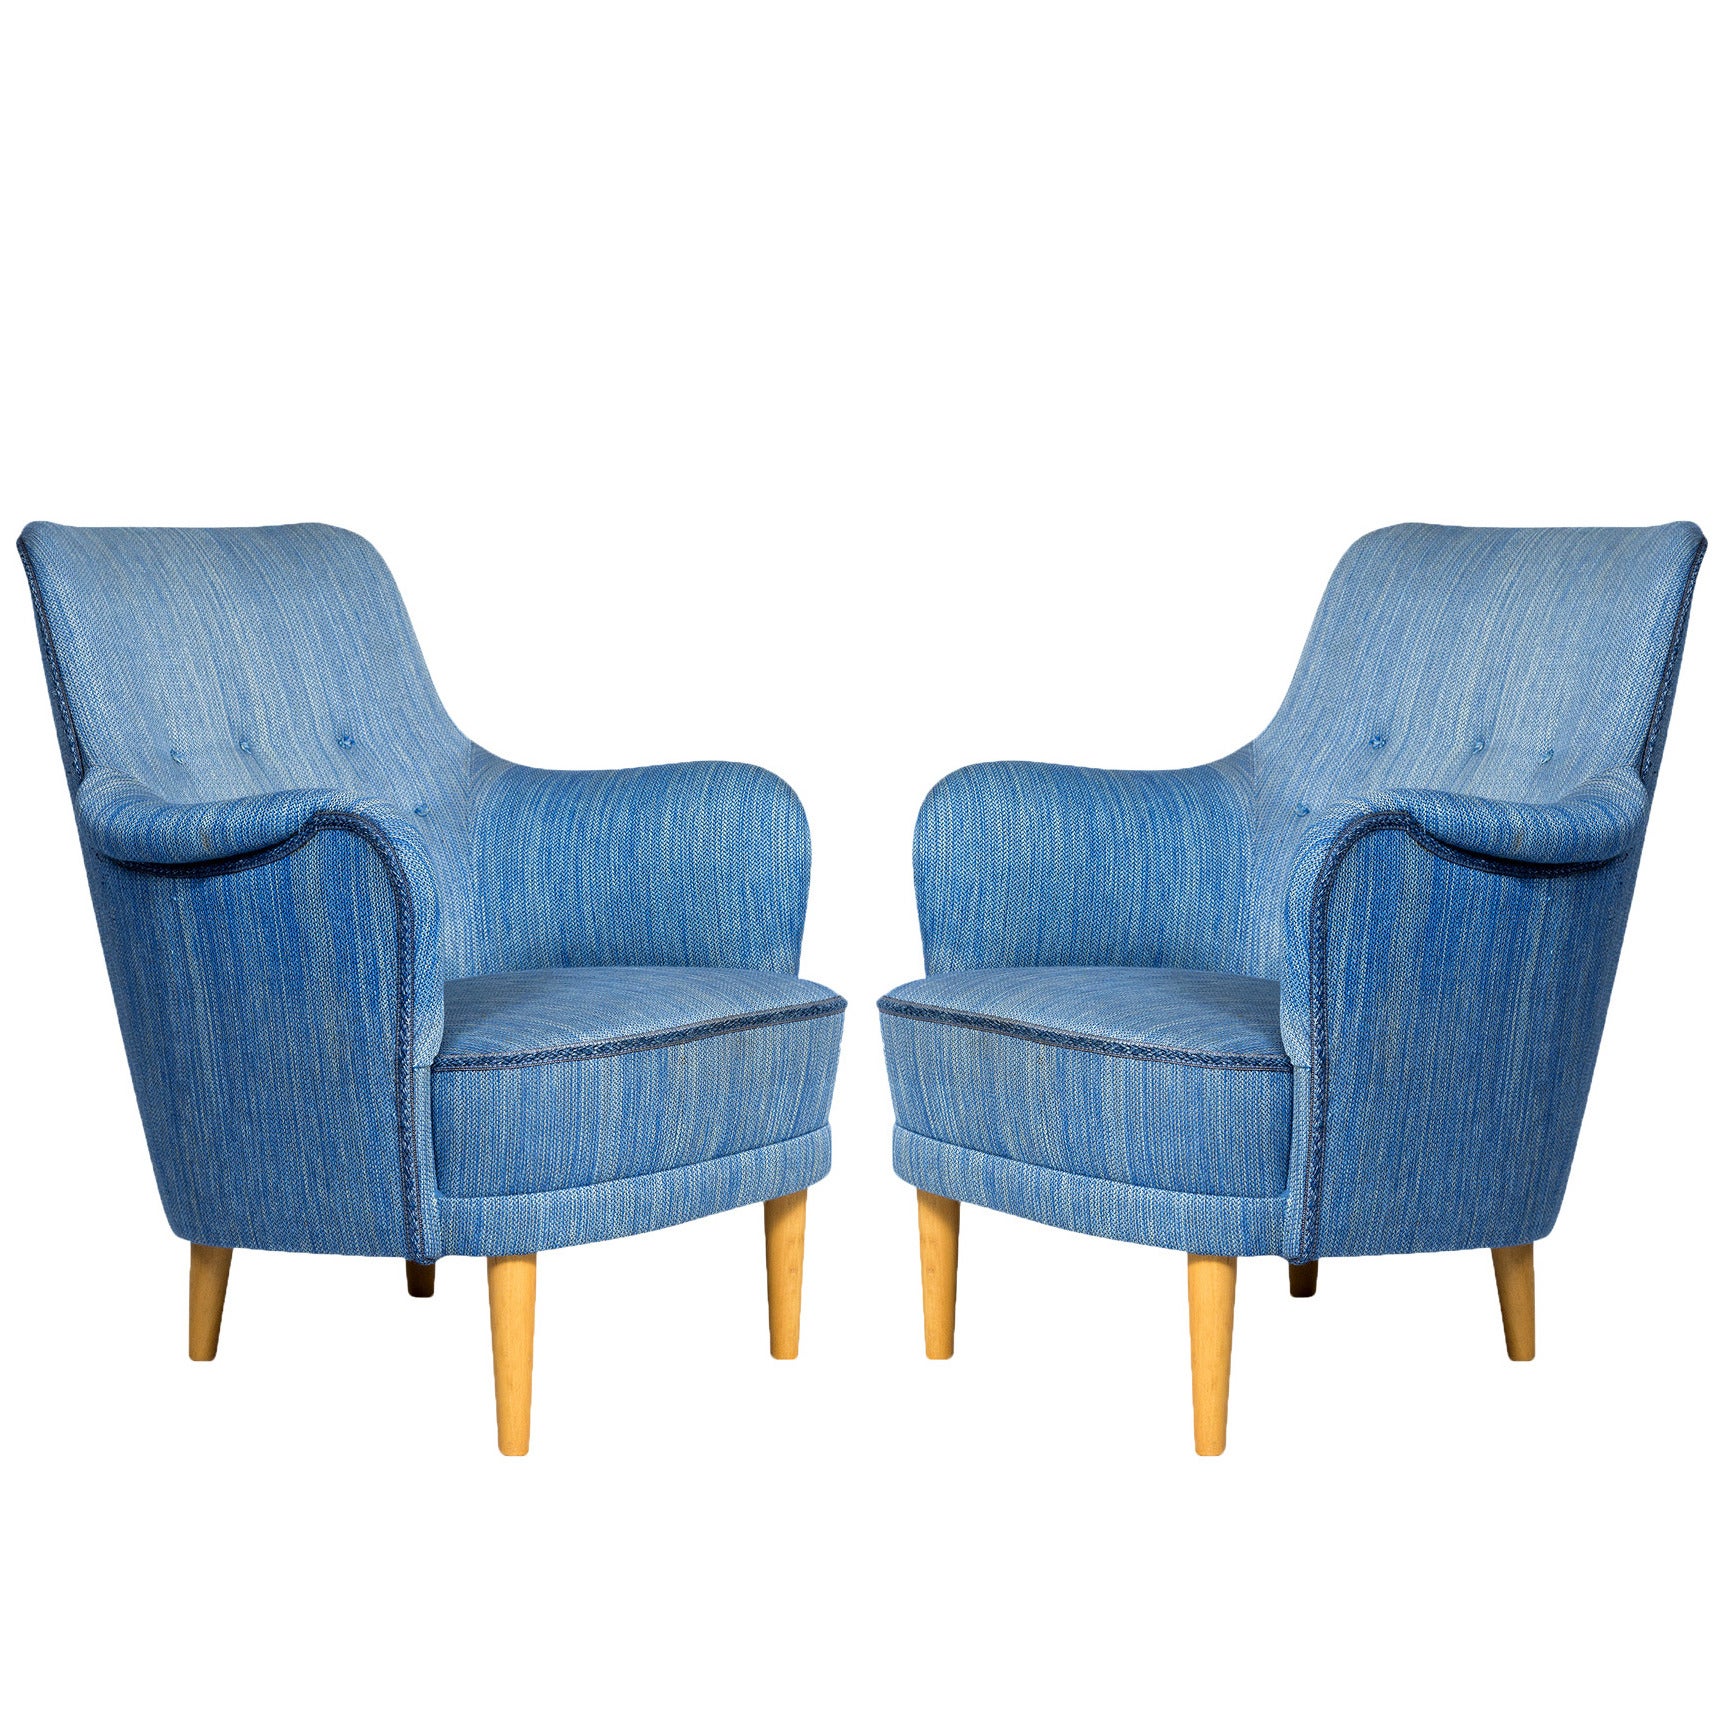 Pair of Carl Malmsten "Samsas" Chairs